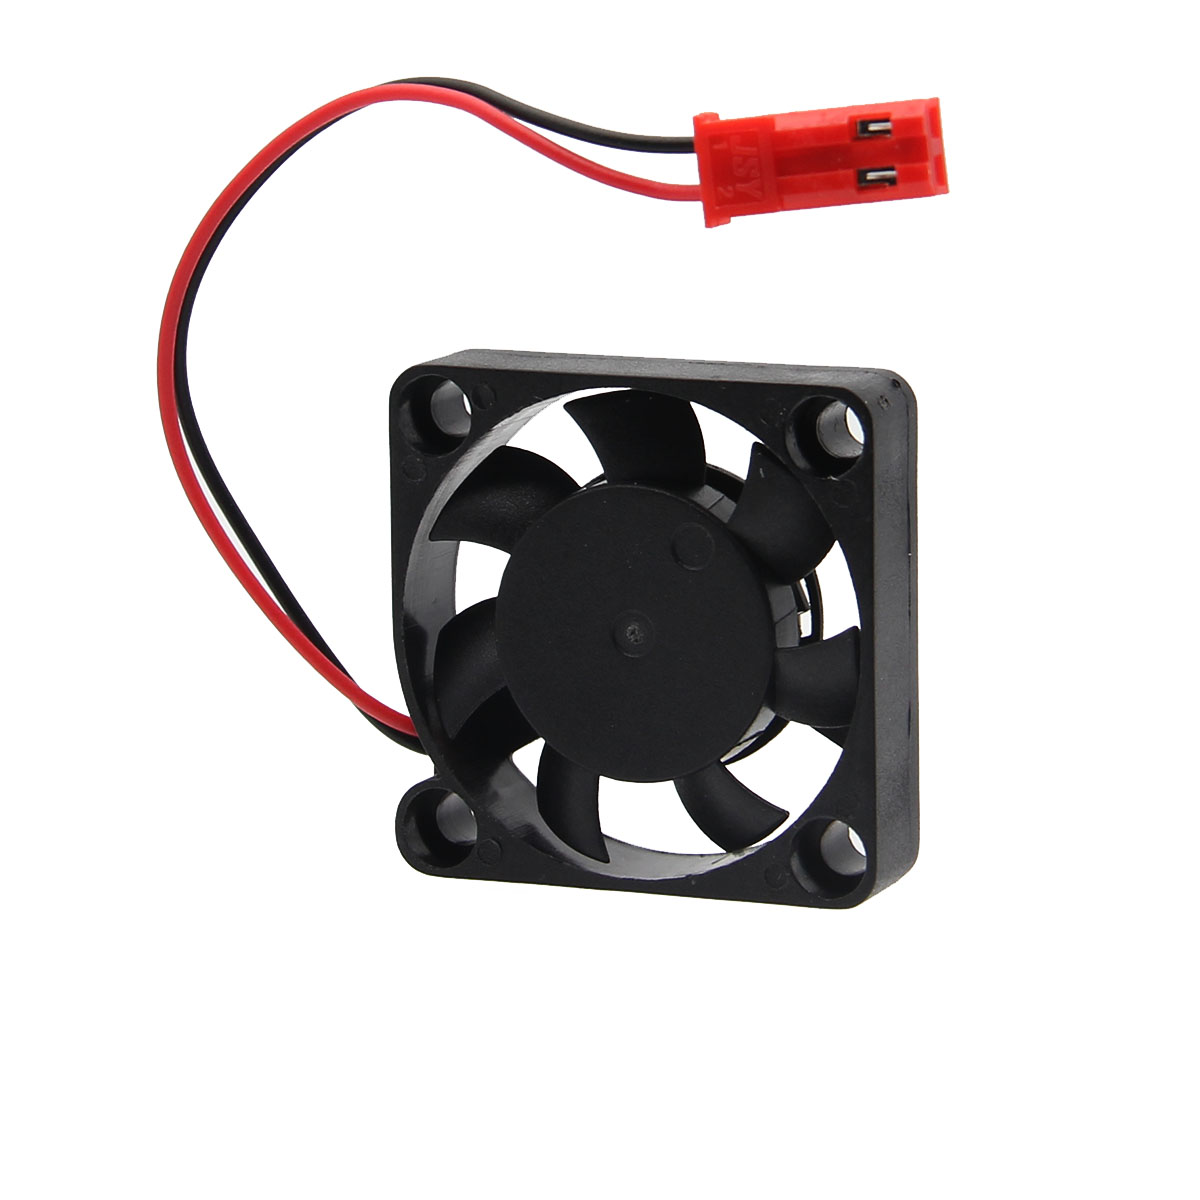 5pcs DIY Ultra Slim Low Noise Active Cooling Mini Fan For Raspberry Pi 3 Model B / 2B / B+ 6